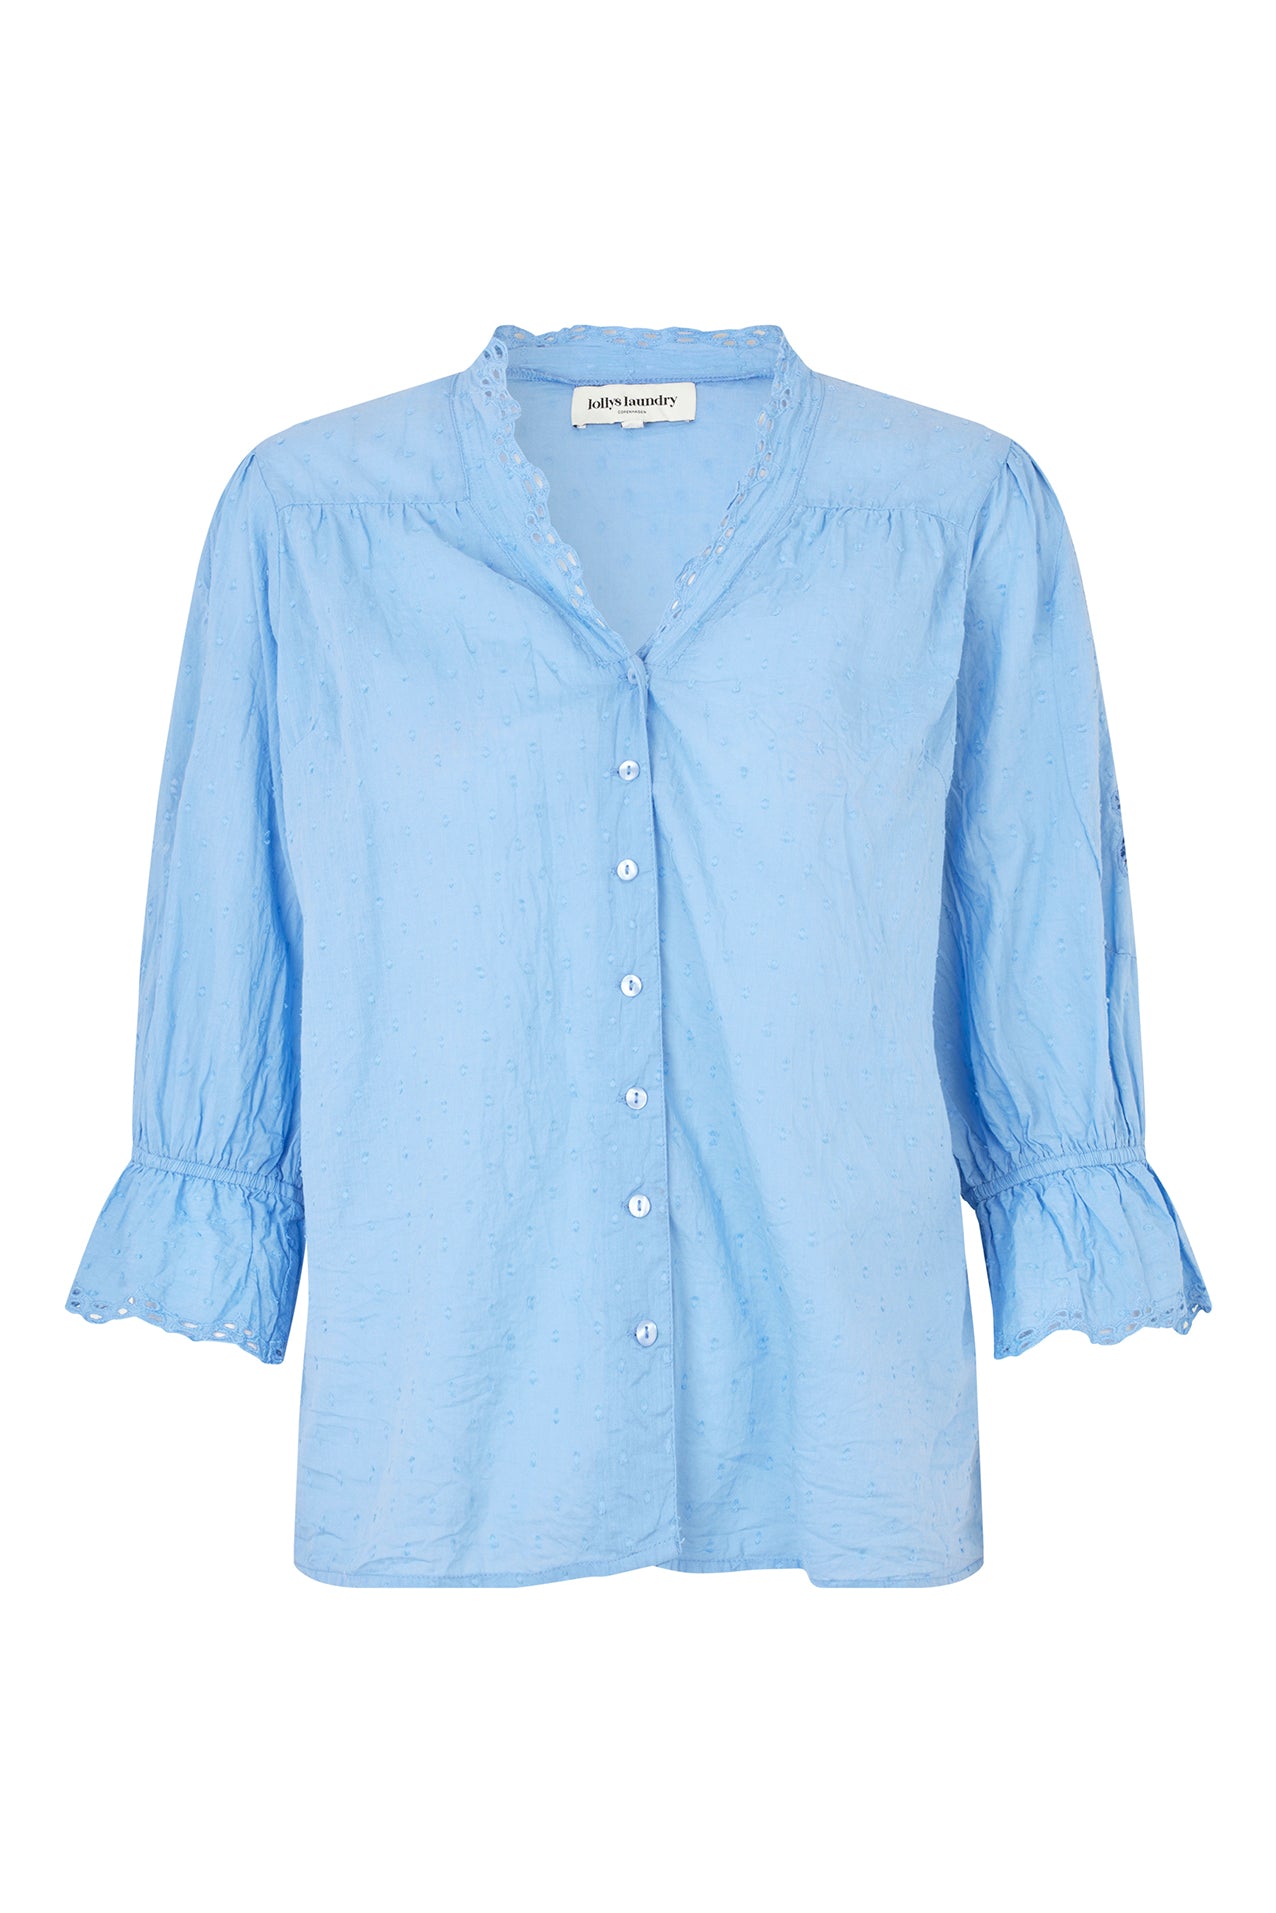 Lollys Laundry CharlieLL Shirt Shirt 20 Blue